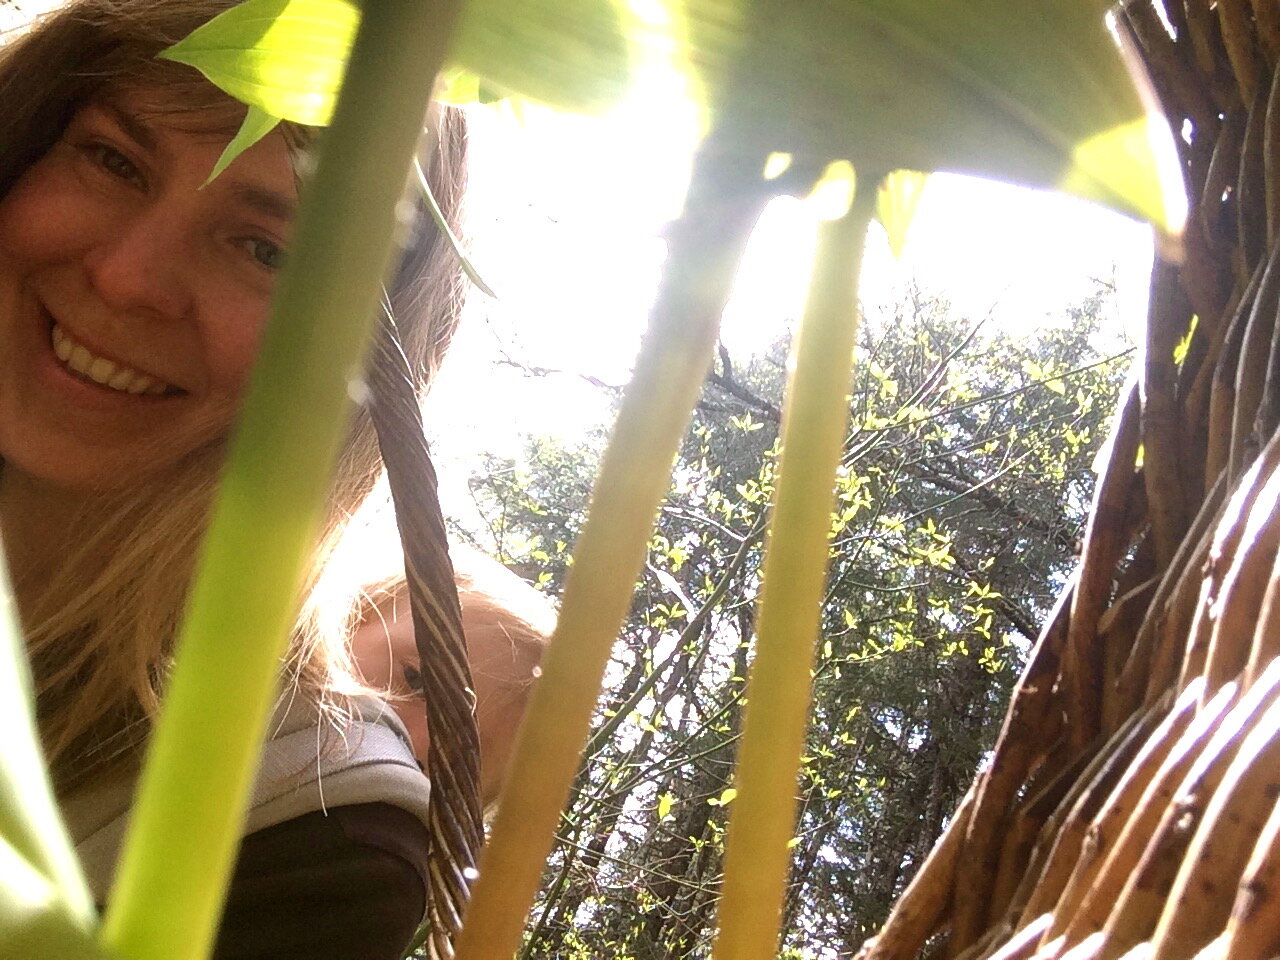 Accidental selfie while harvesting